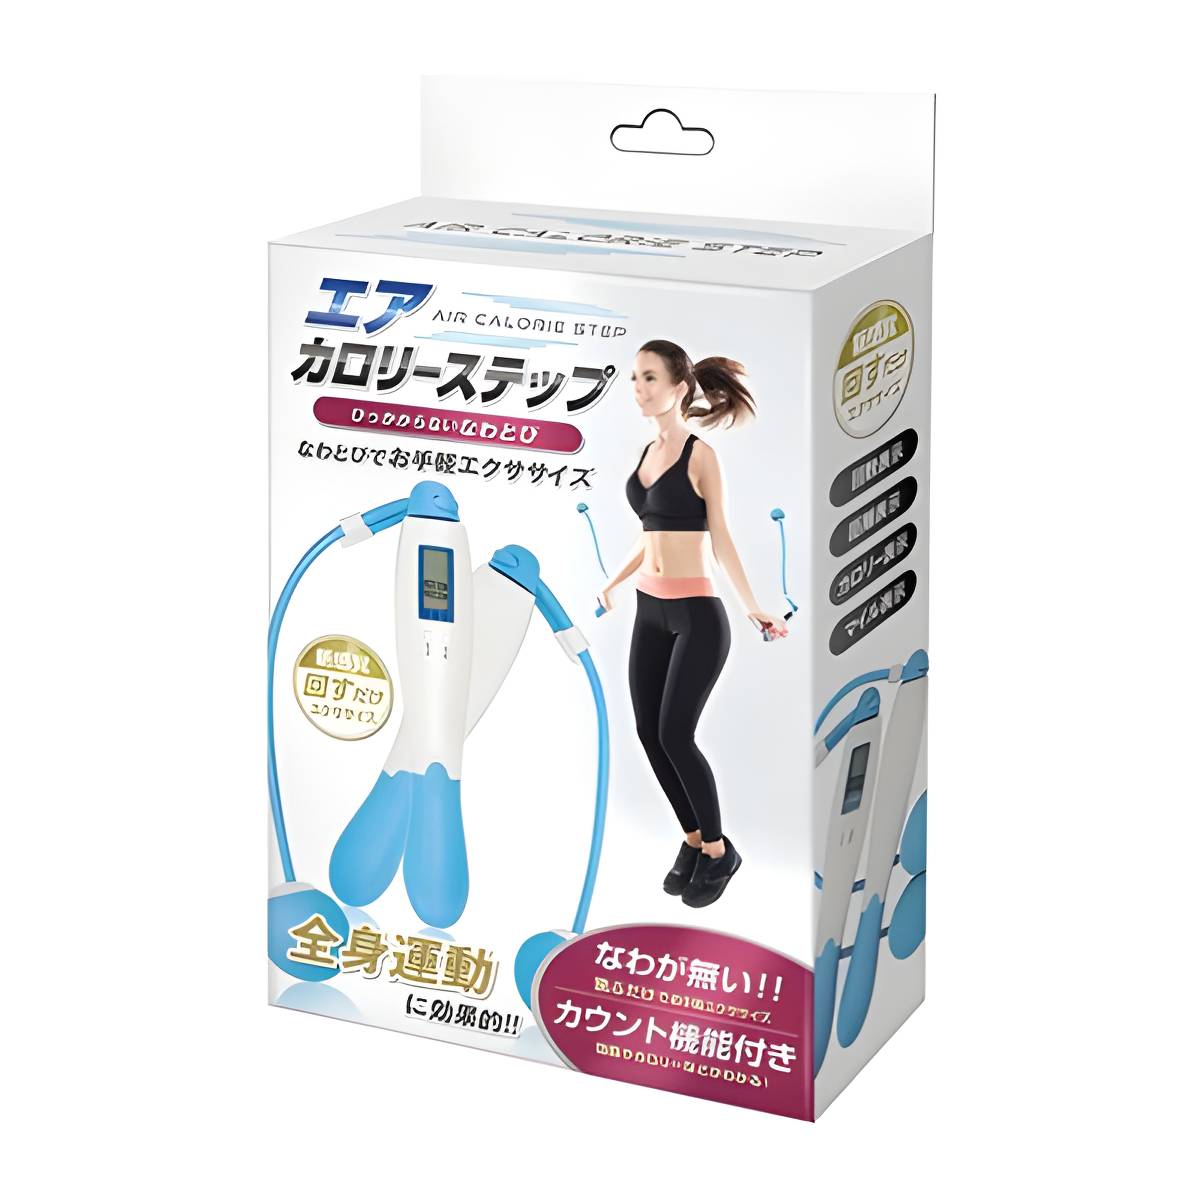 Air Calorie Step (Japan Edition)